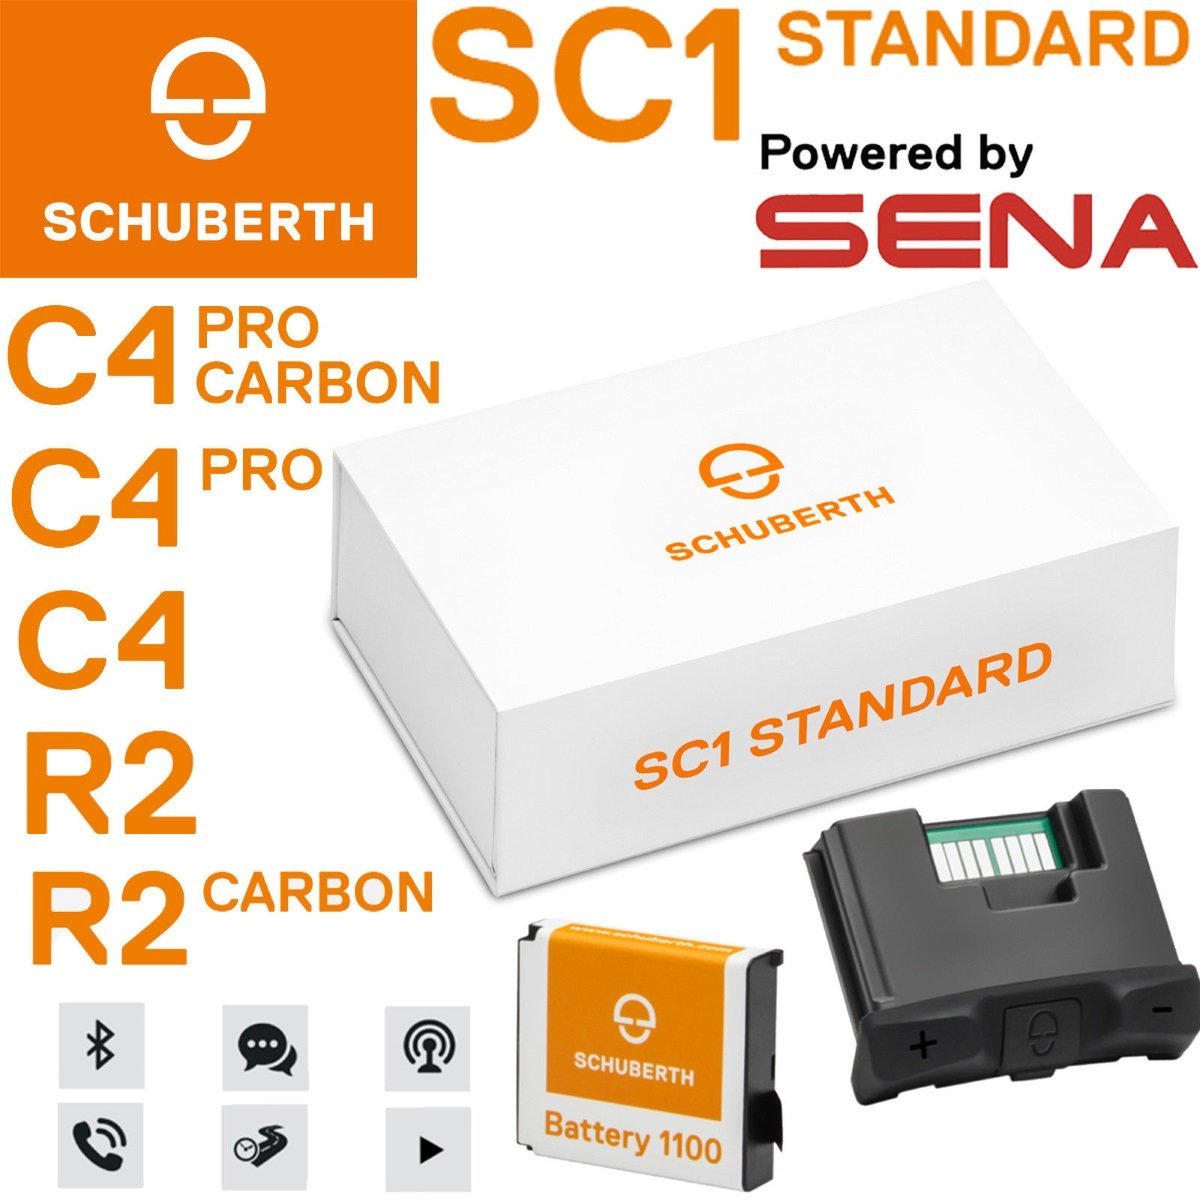 SENA Interkom SC1 Standard Schuberth C4/R2